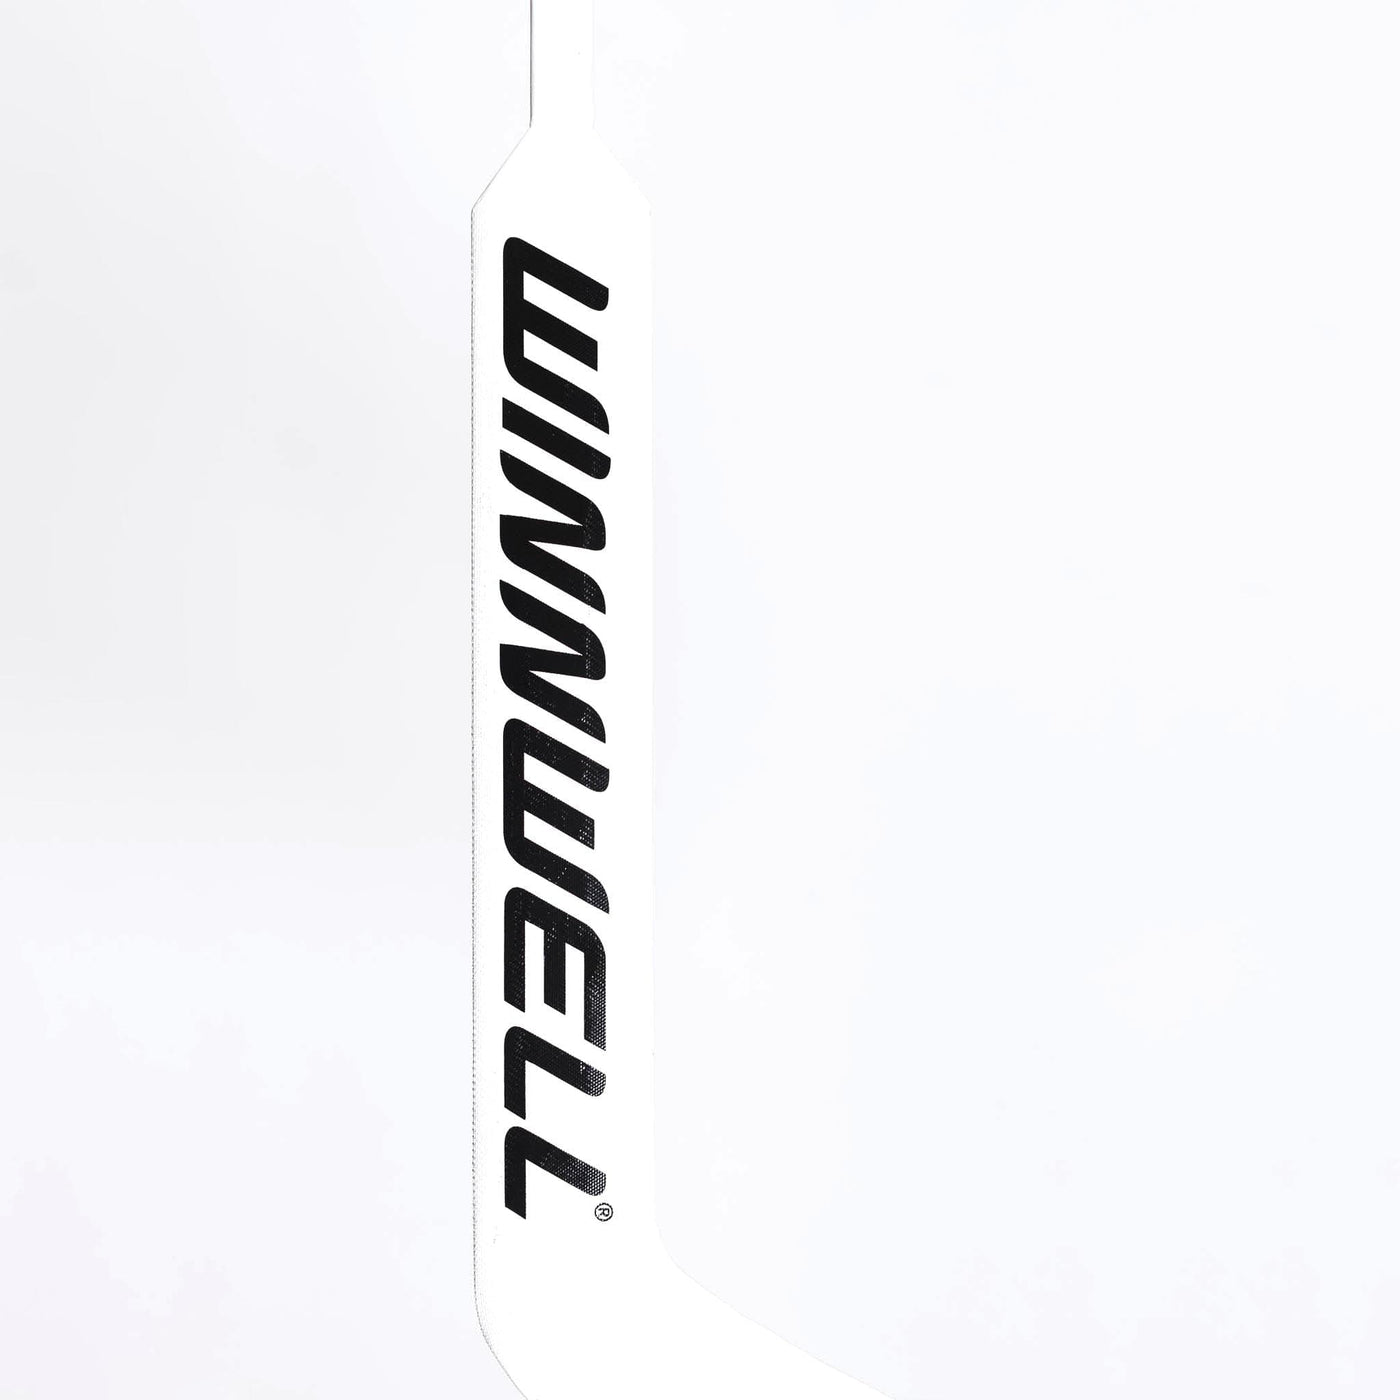 Winnwell GXW1 Intermediate Wood Goalie Stick - TheHockeyShop.com